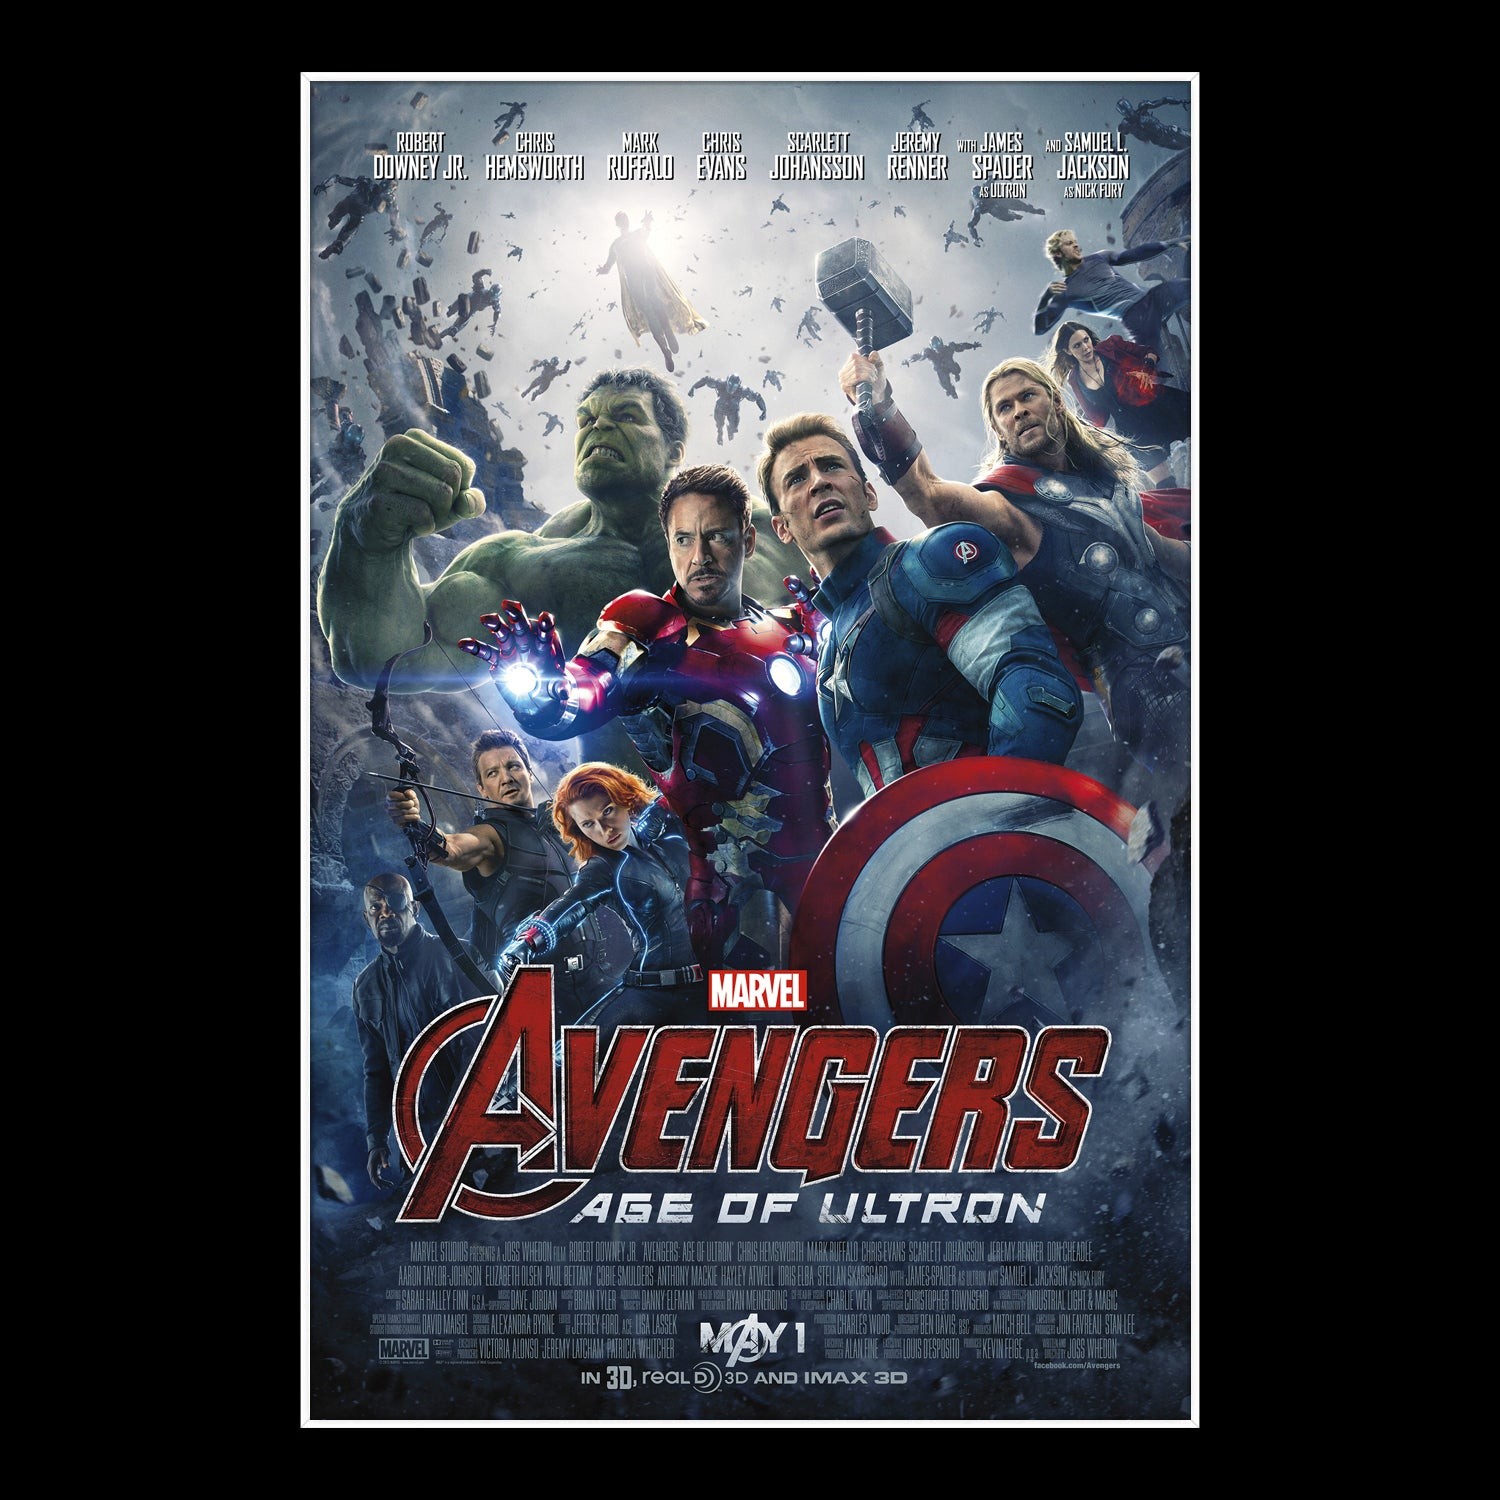 Avengers: Endgame Script Limited Signature Edition Custom Frame